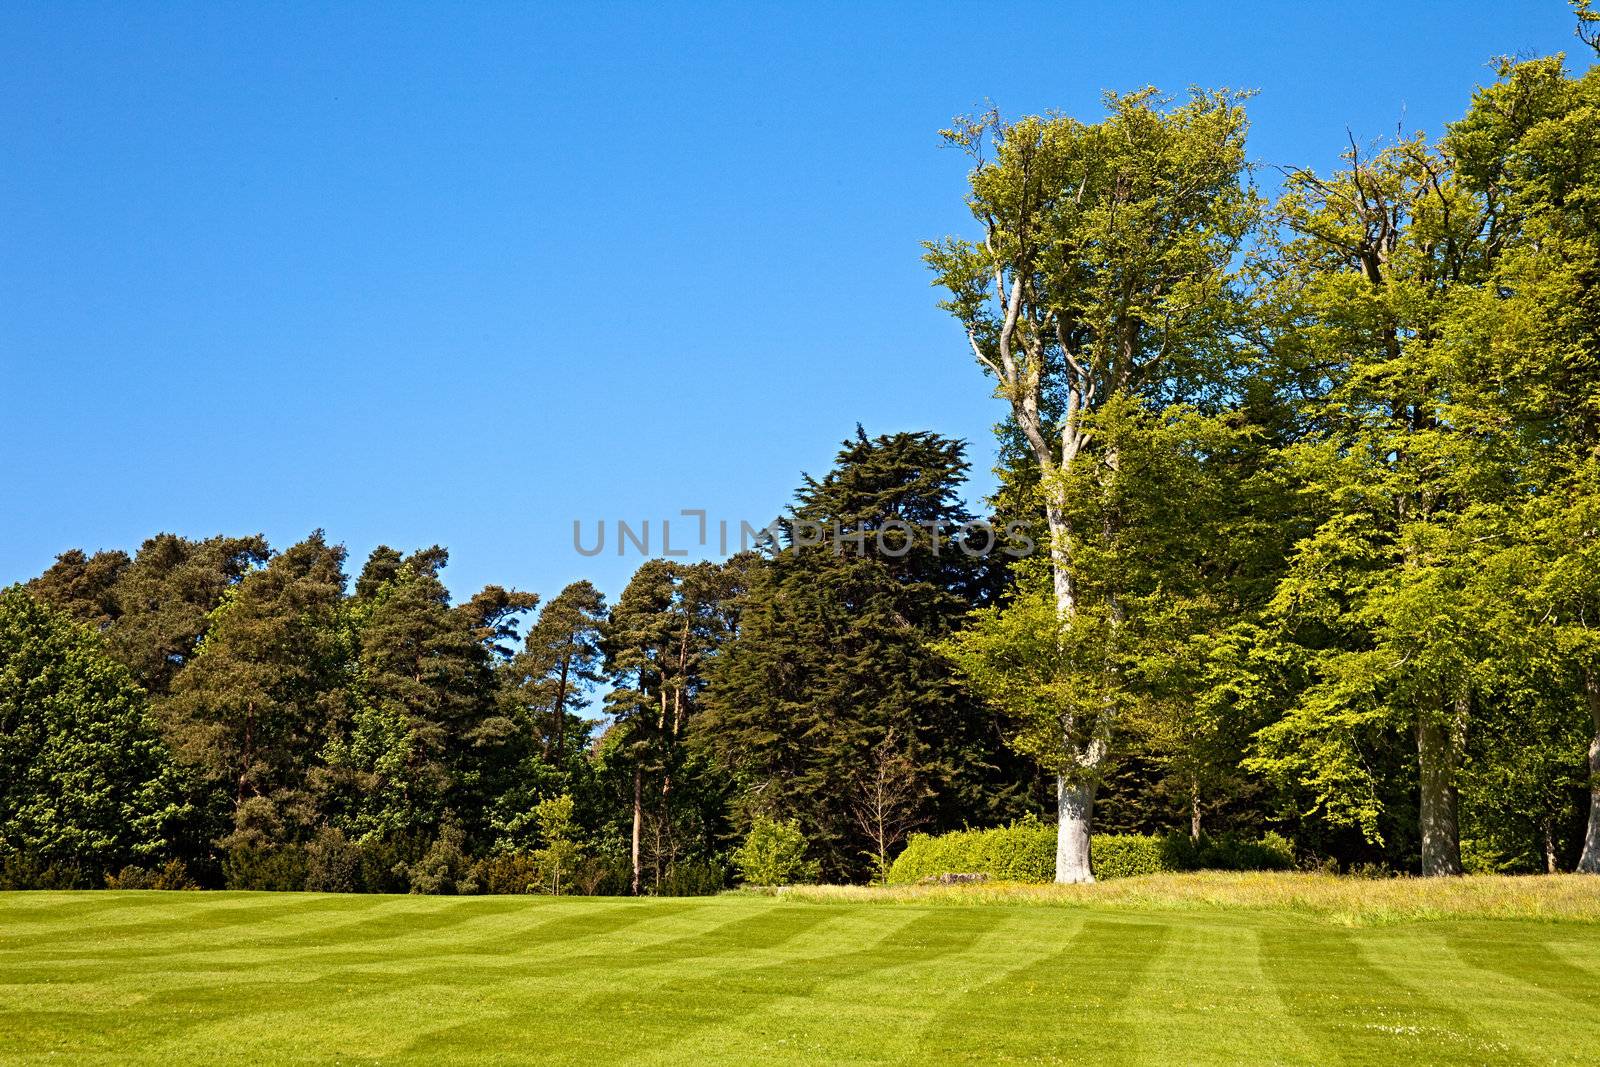 Striped lawn by Clivia